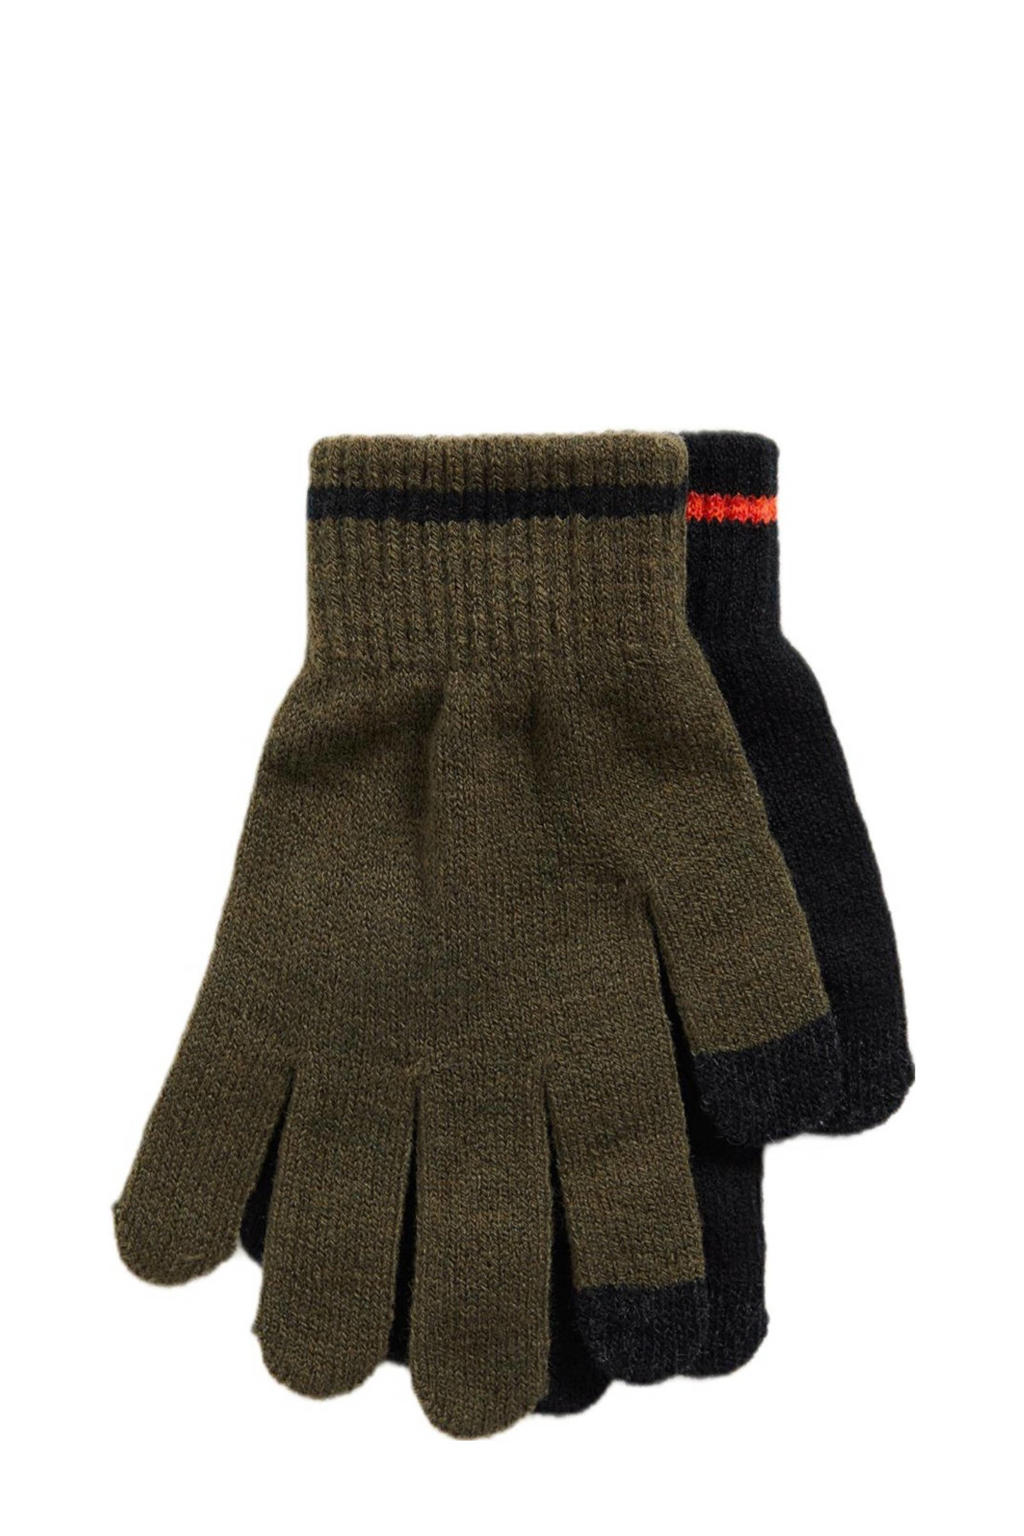 WE Fashion handschoenen - set van 2 zwart/kaki